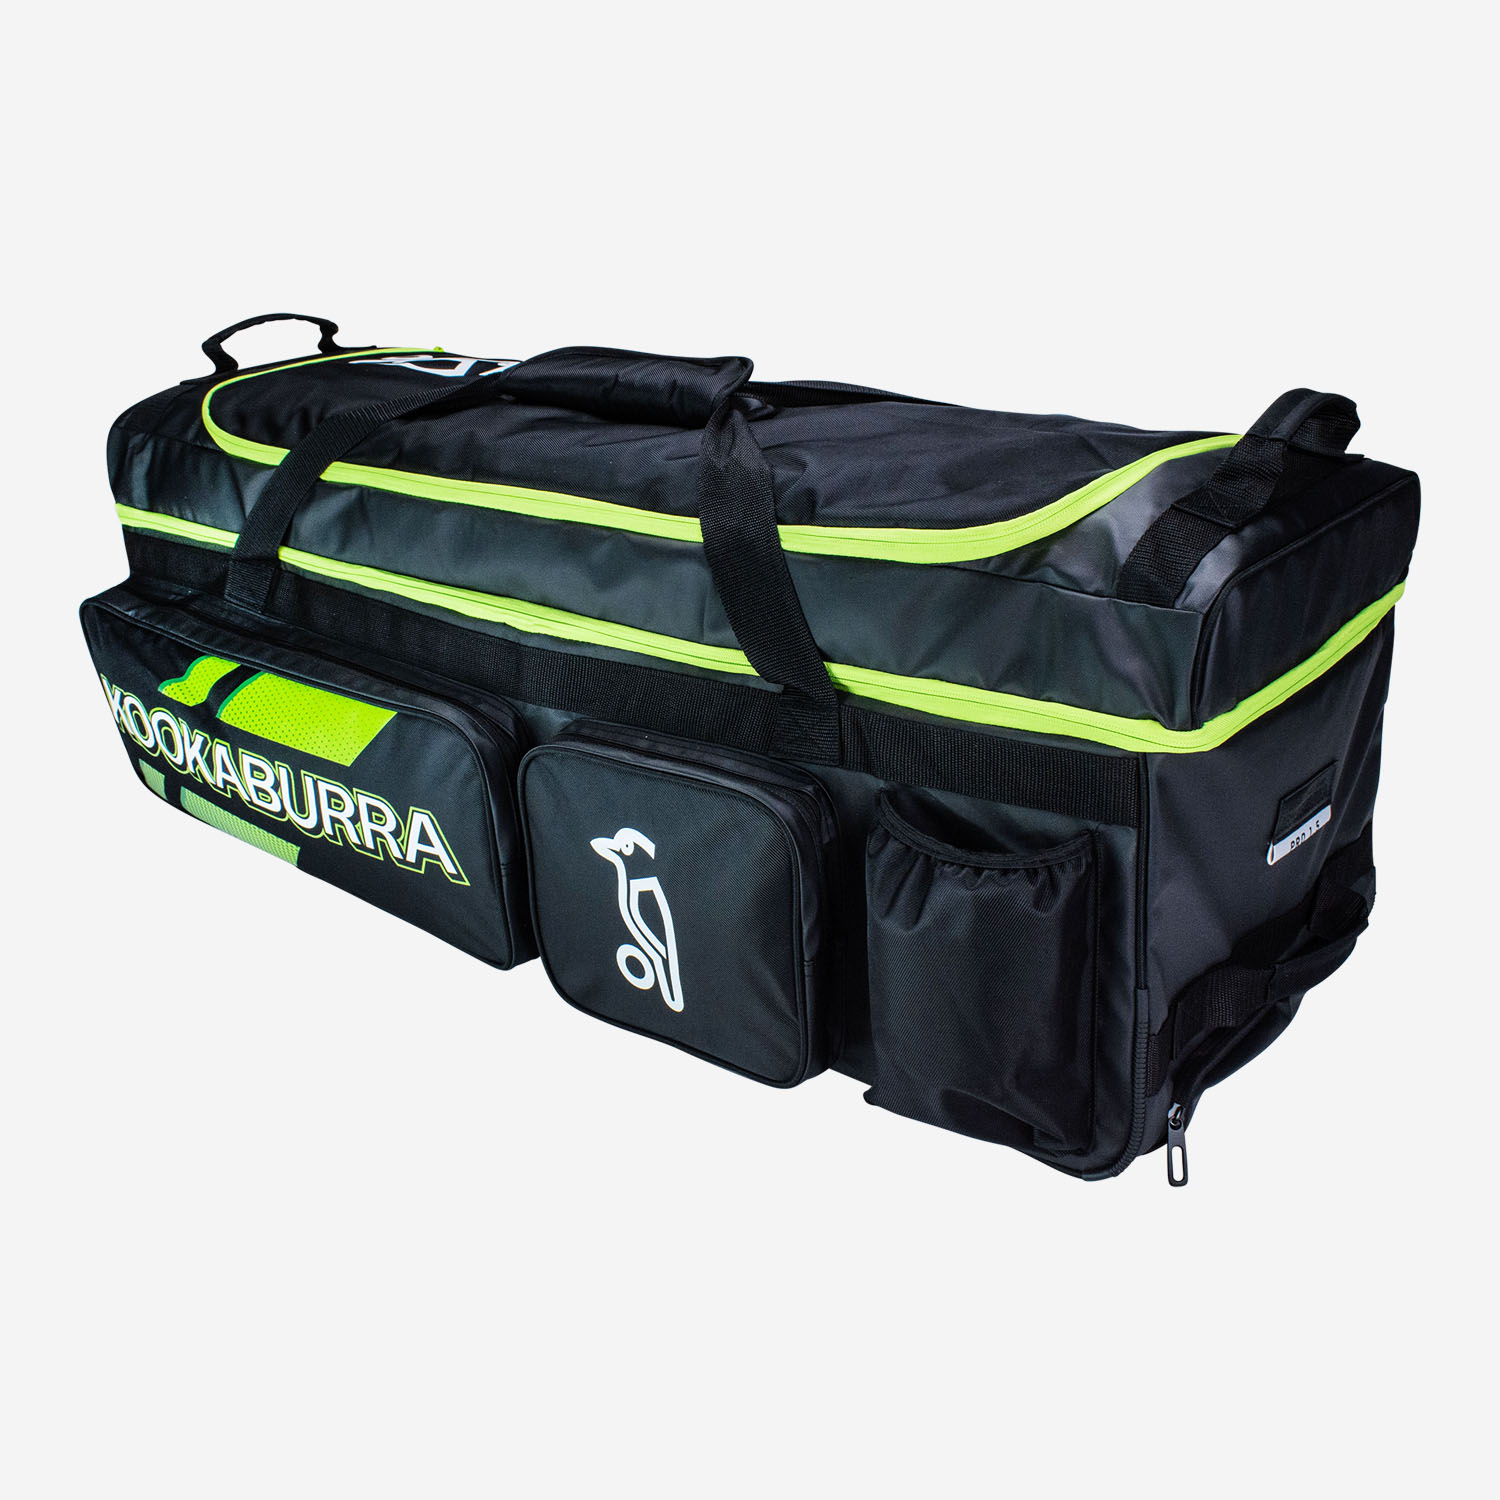 Kookaburra Pro 1.5 Wheelie Bag